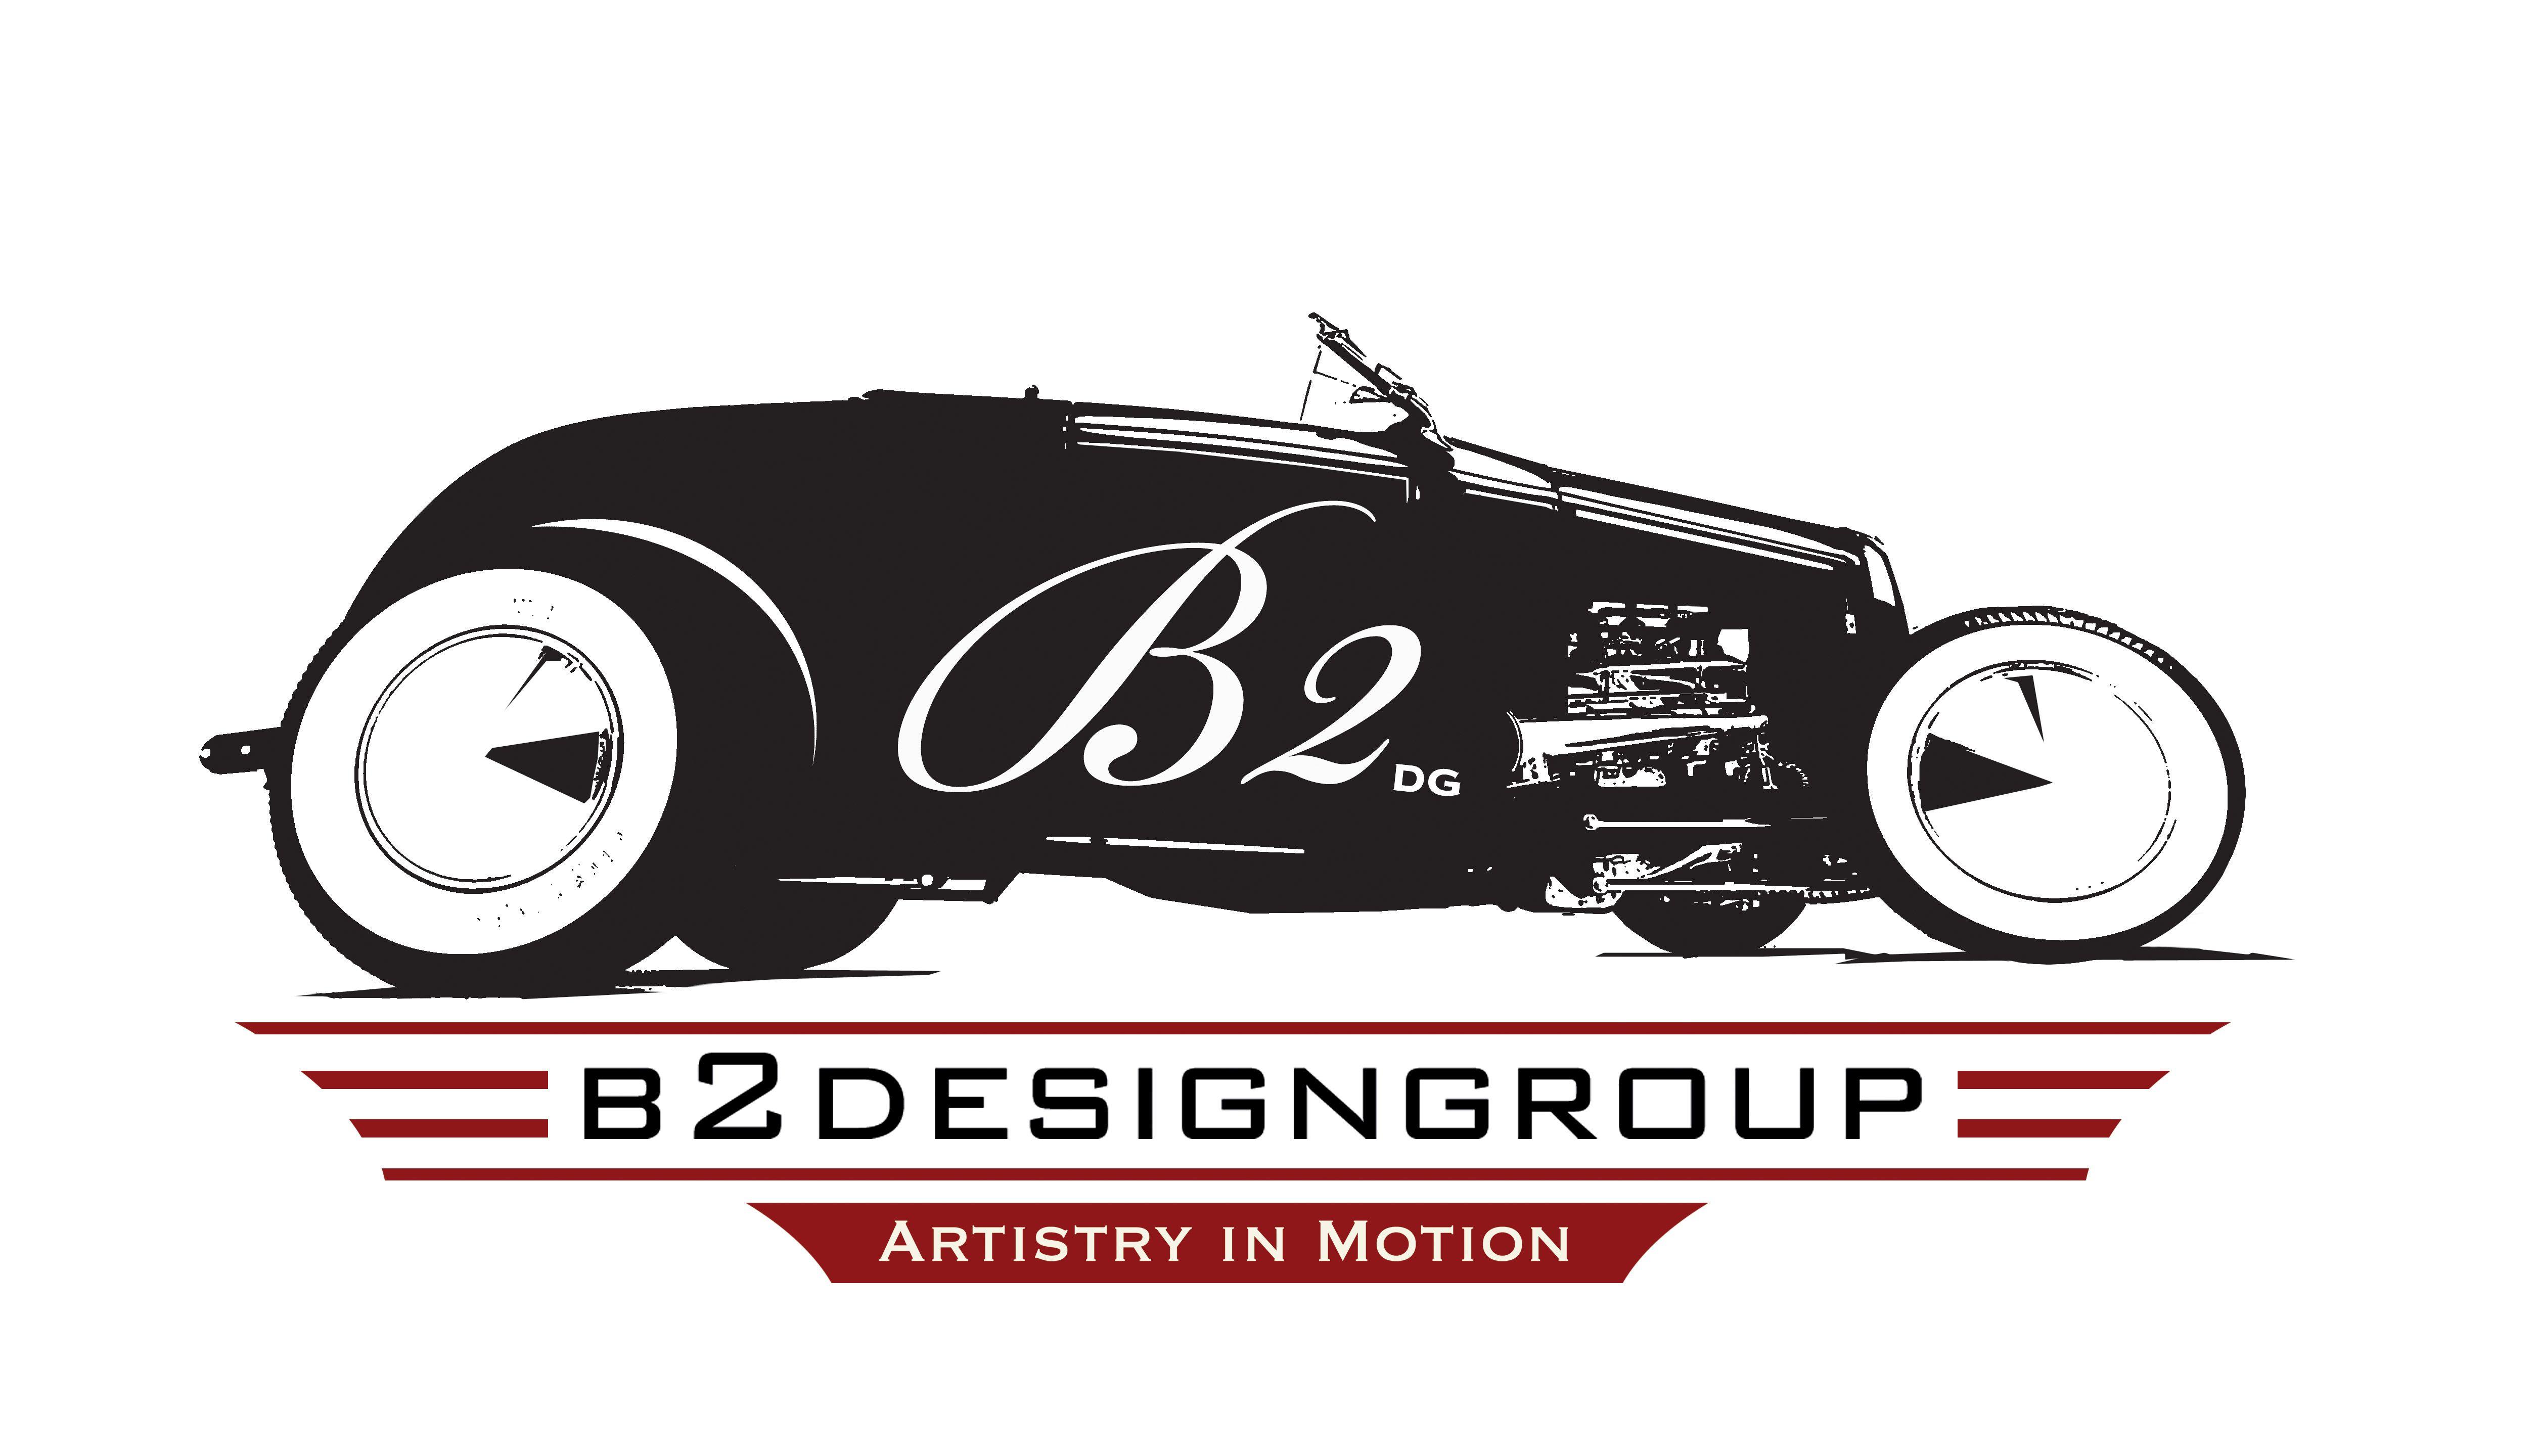 Old School Ford Logo - B2 Design Group logo | Rod Shop Logos | Pinterest | Hot rods, Cars ...